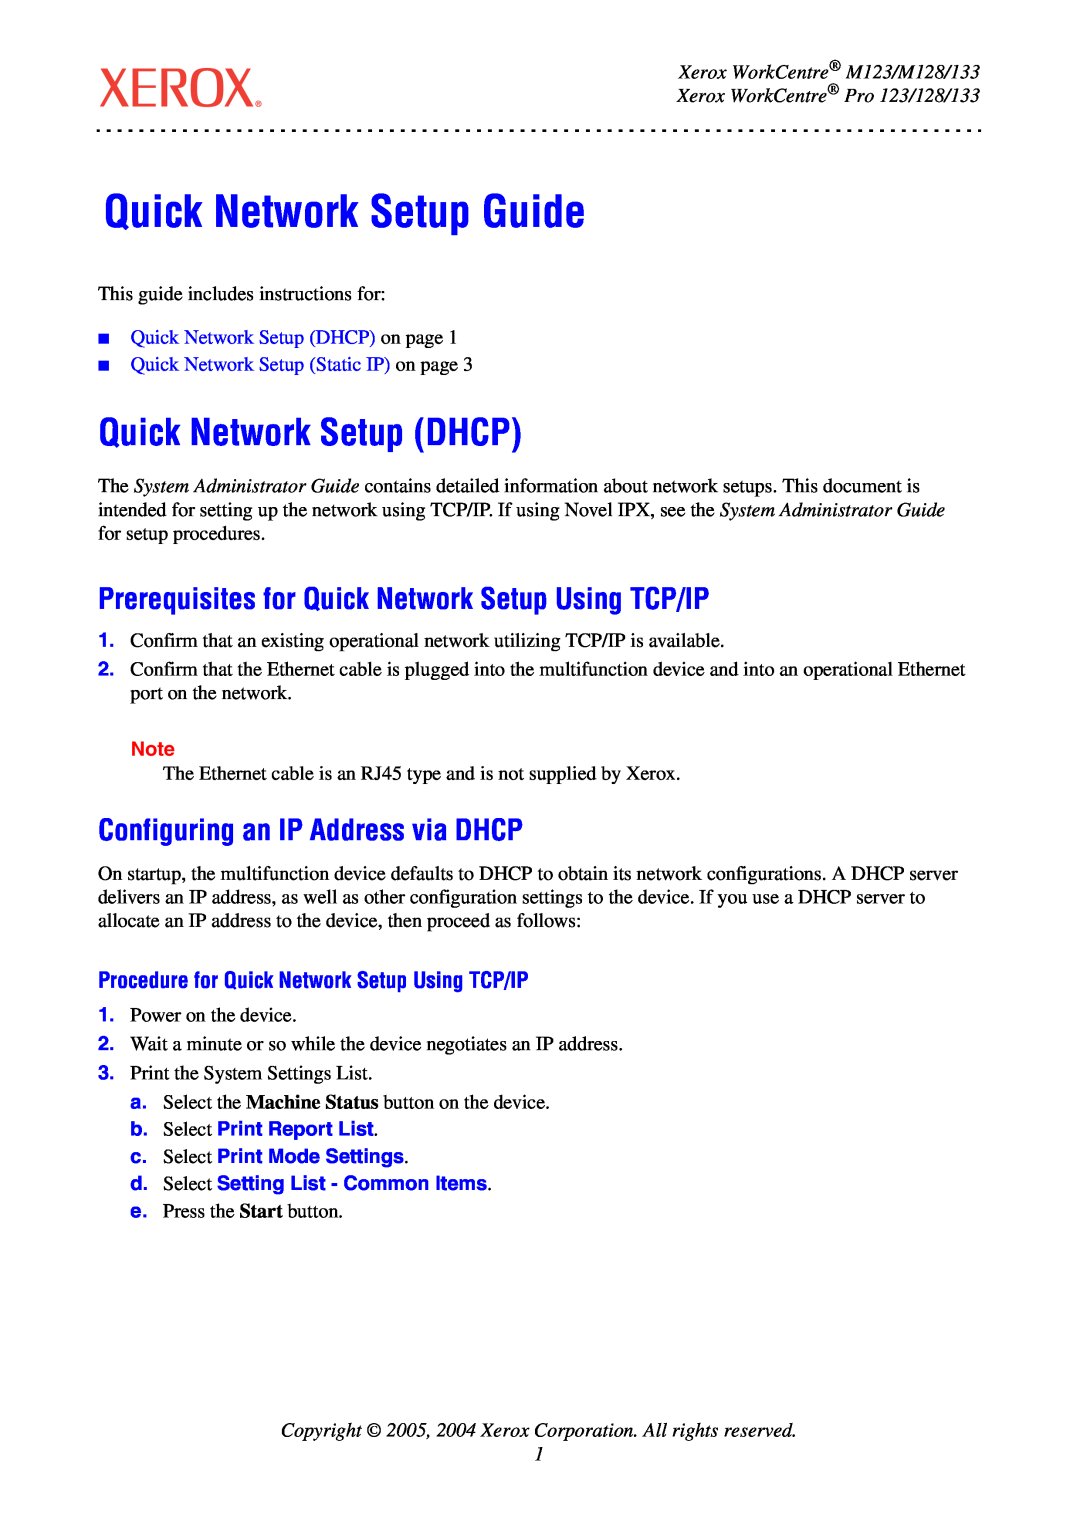 Xerox M123, M128, 133 Quick Network Setup Guide, Quick Network Setup DHCP, Procedure for Quick Network Setup Using TCP/IP 